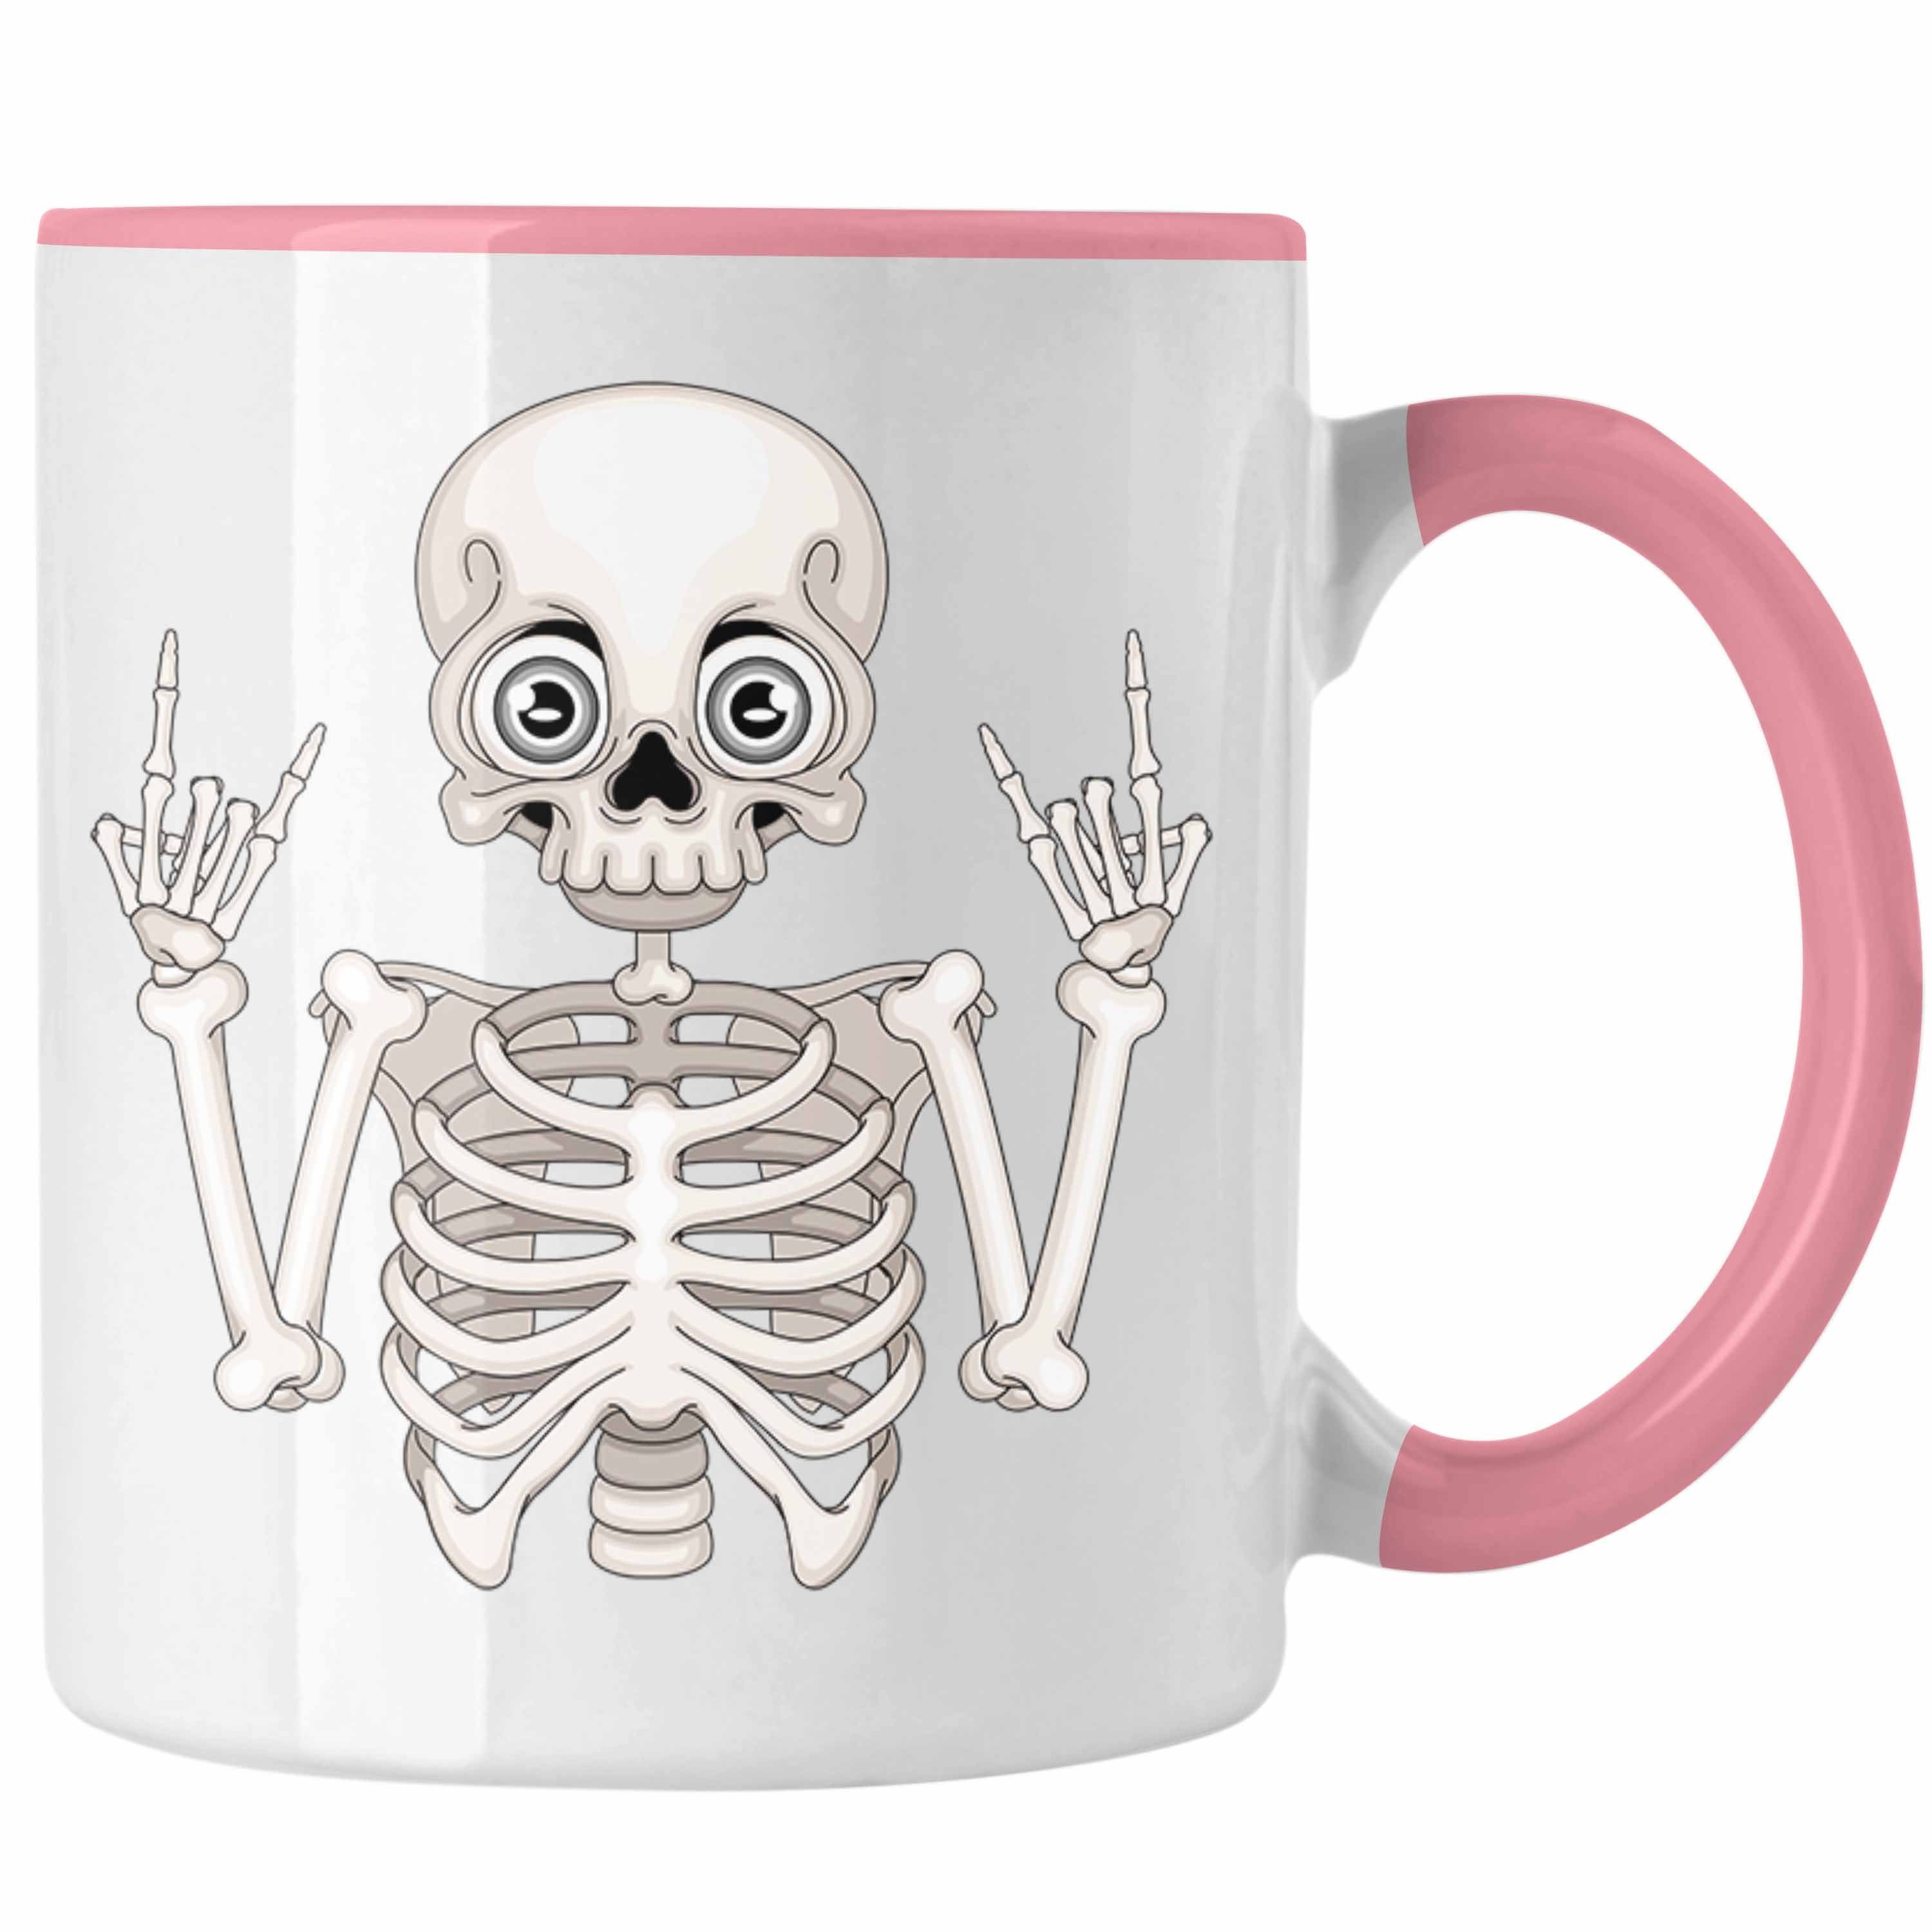 Tasse Tasse Lustige Rosa Roll Geschenkidee Tasse Trendation n Fans: Skelett Rock